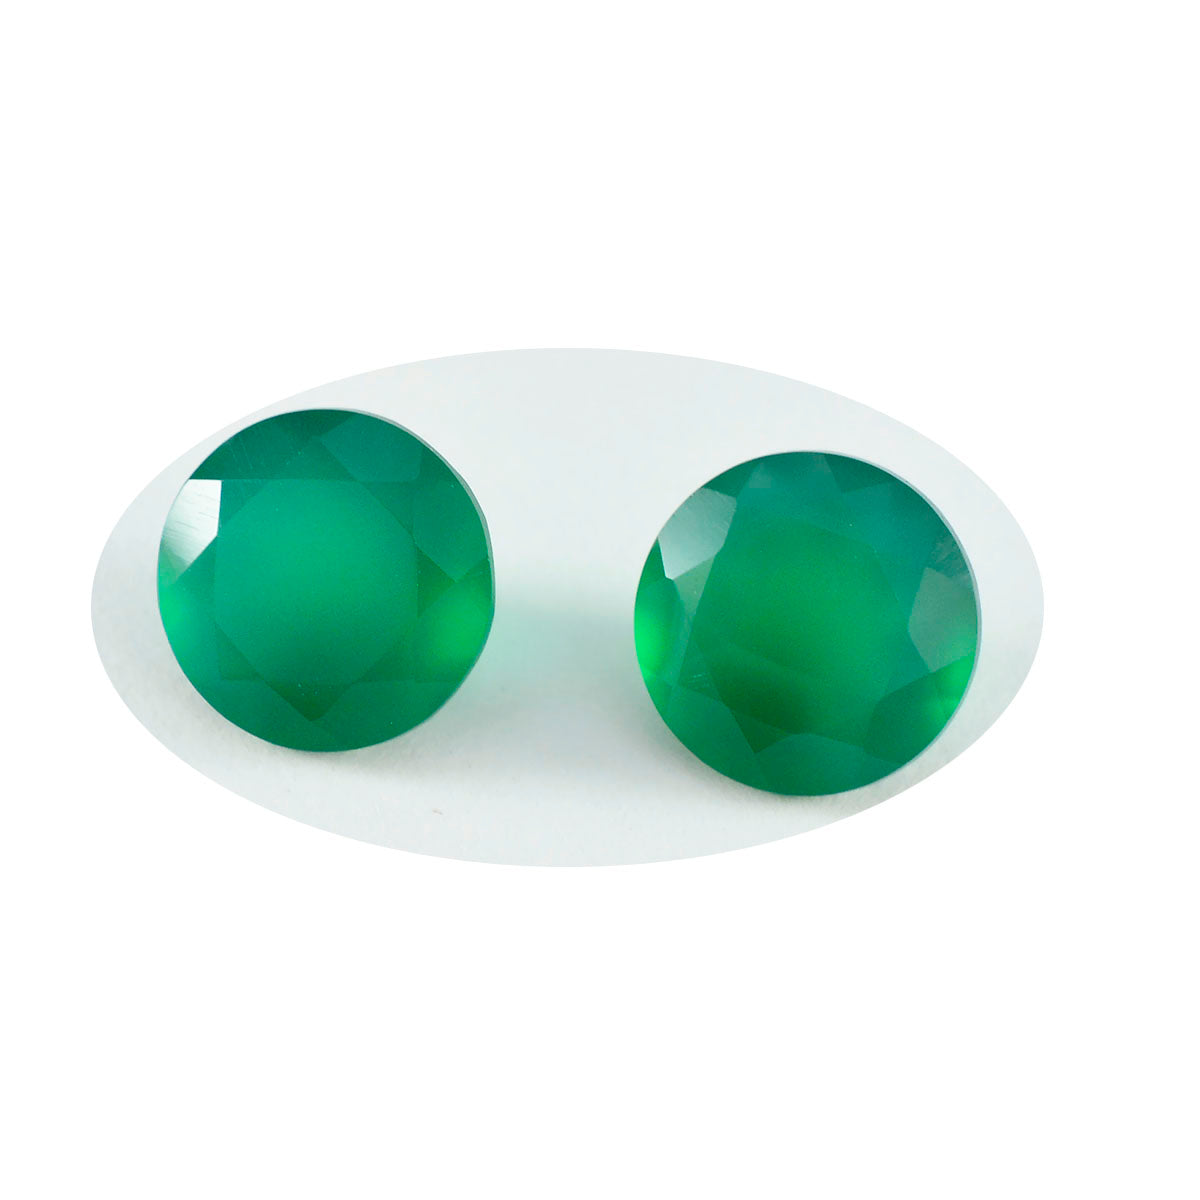 Riyogems 1PC echte groene onyx gefacetteerd 7x7 mm ronde vorm mooie kwaliteit steen